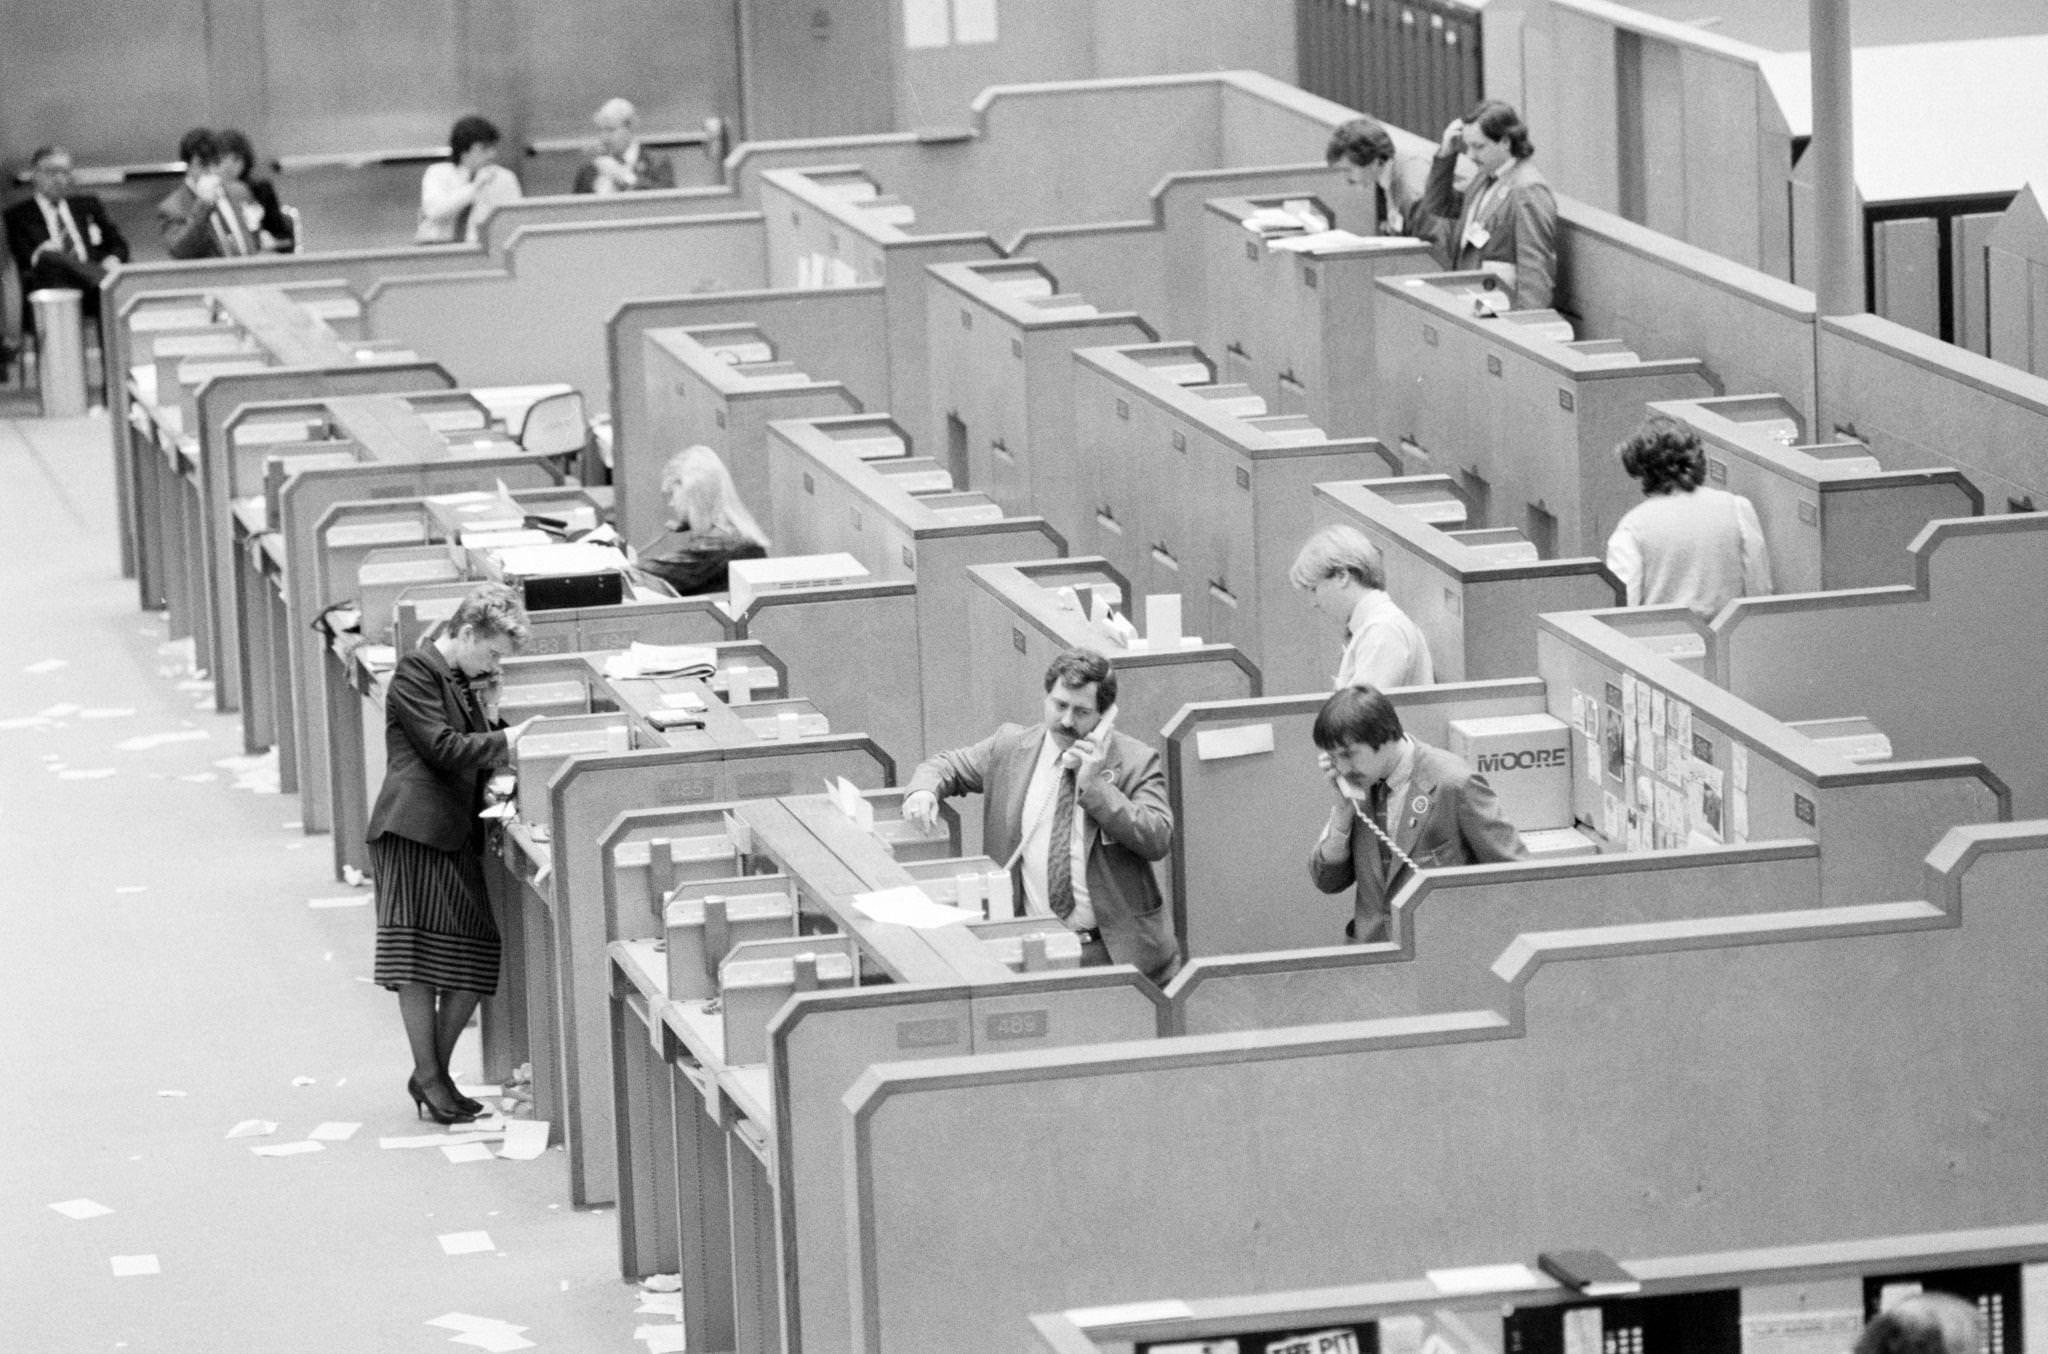 The Toronto Stock Exchange in Canada, 1987